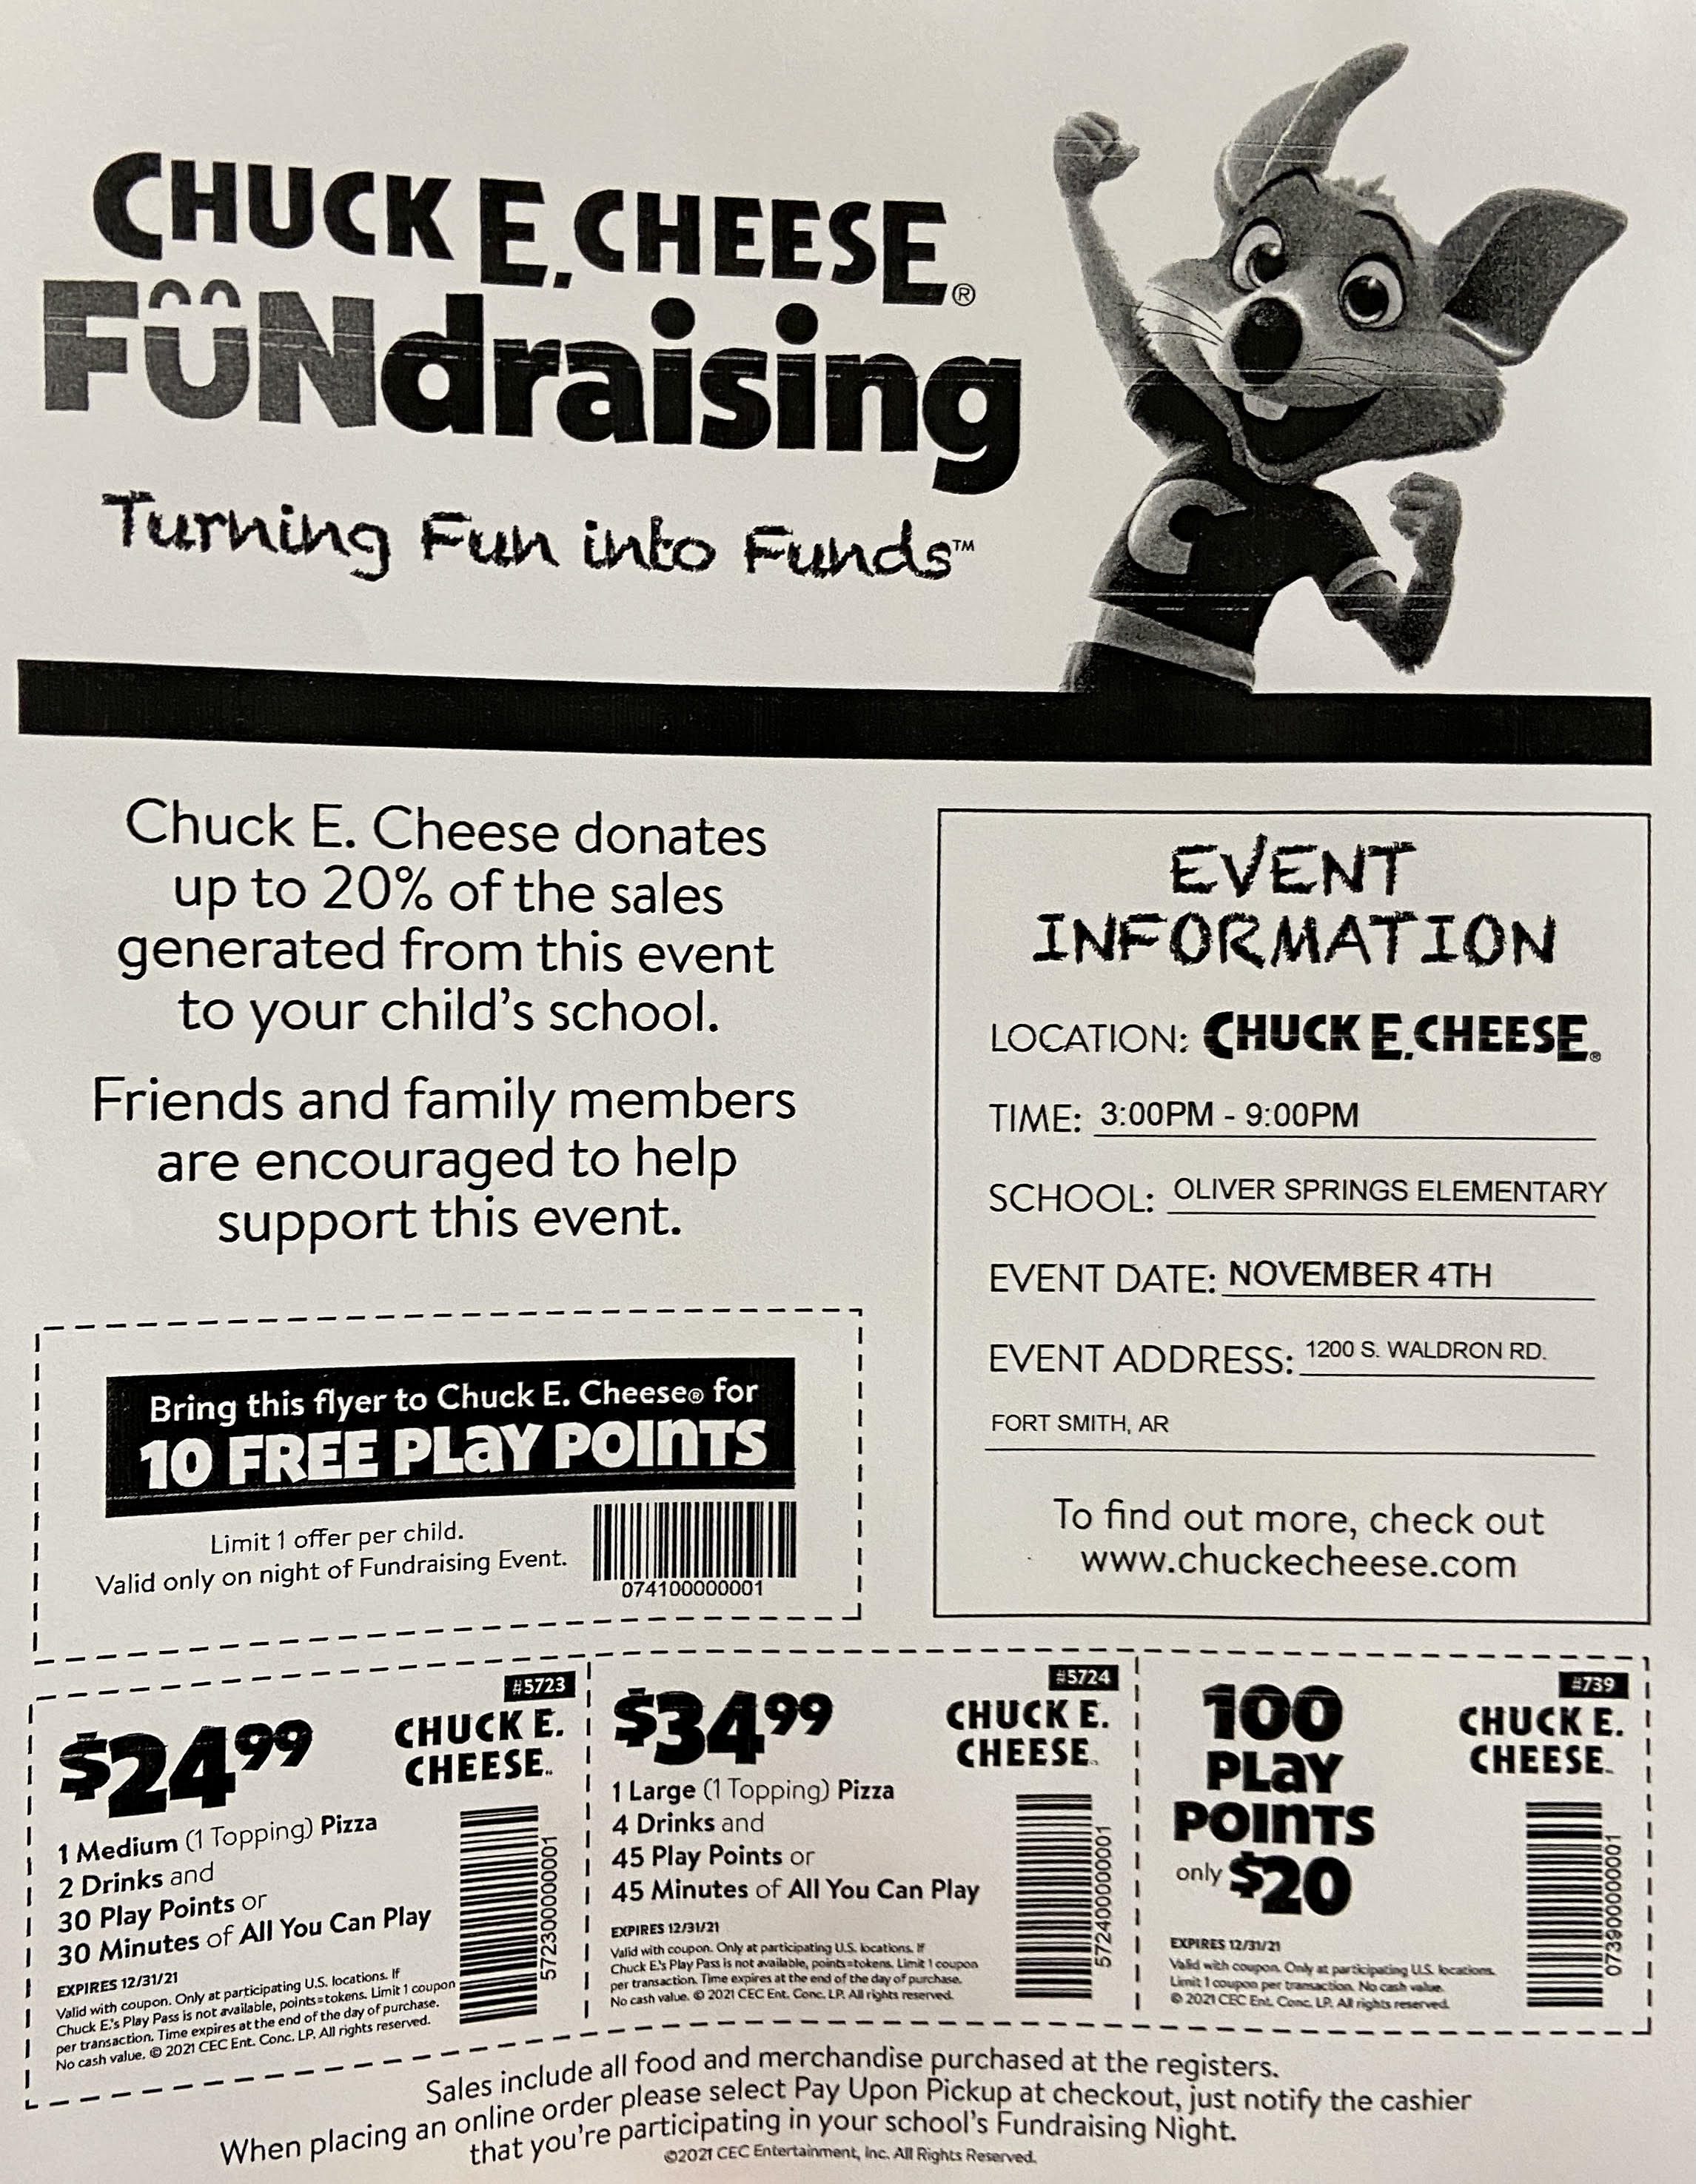 Chuck E. Cheese PTA Fundraising Event